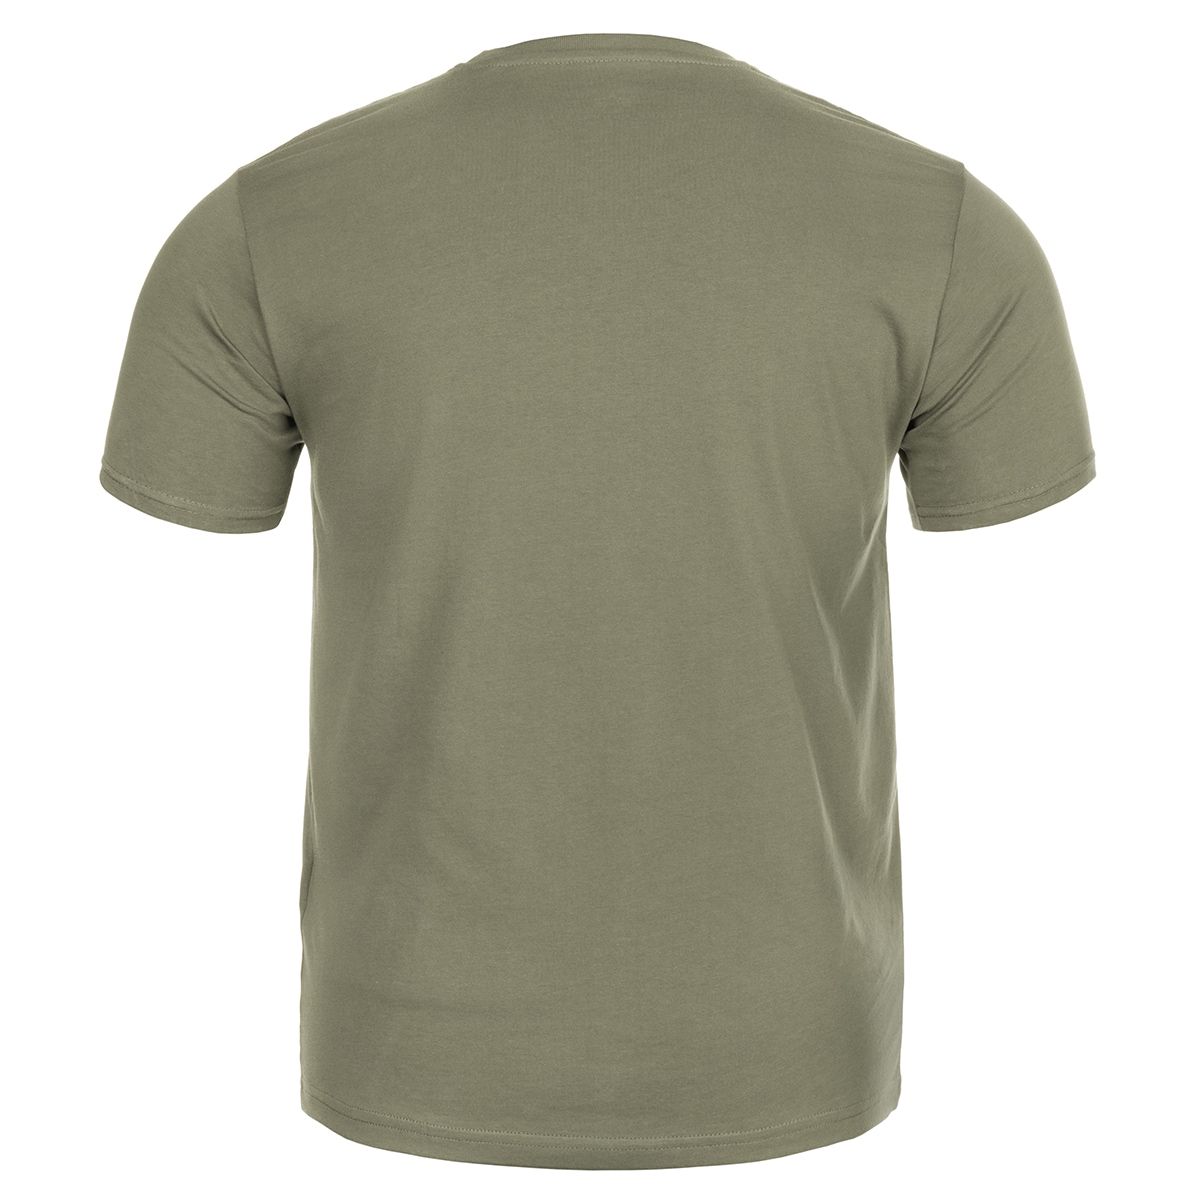 Koszulka T-shirt Alpha Industries Basic - Olive/Black